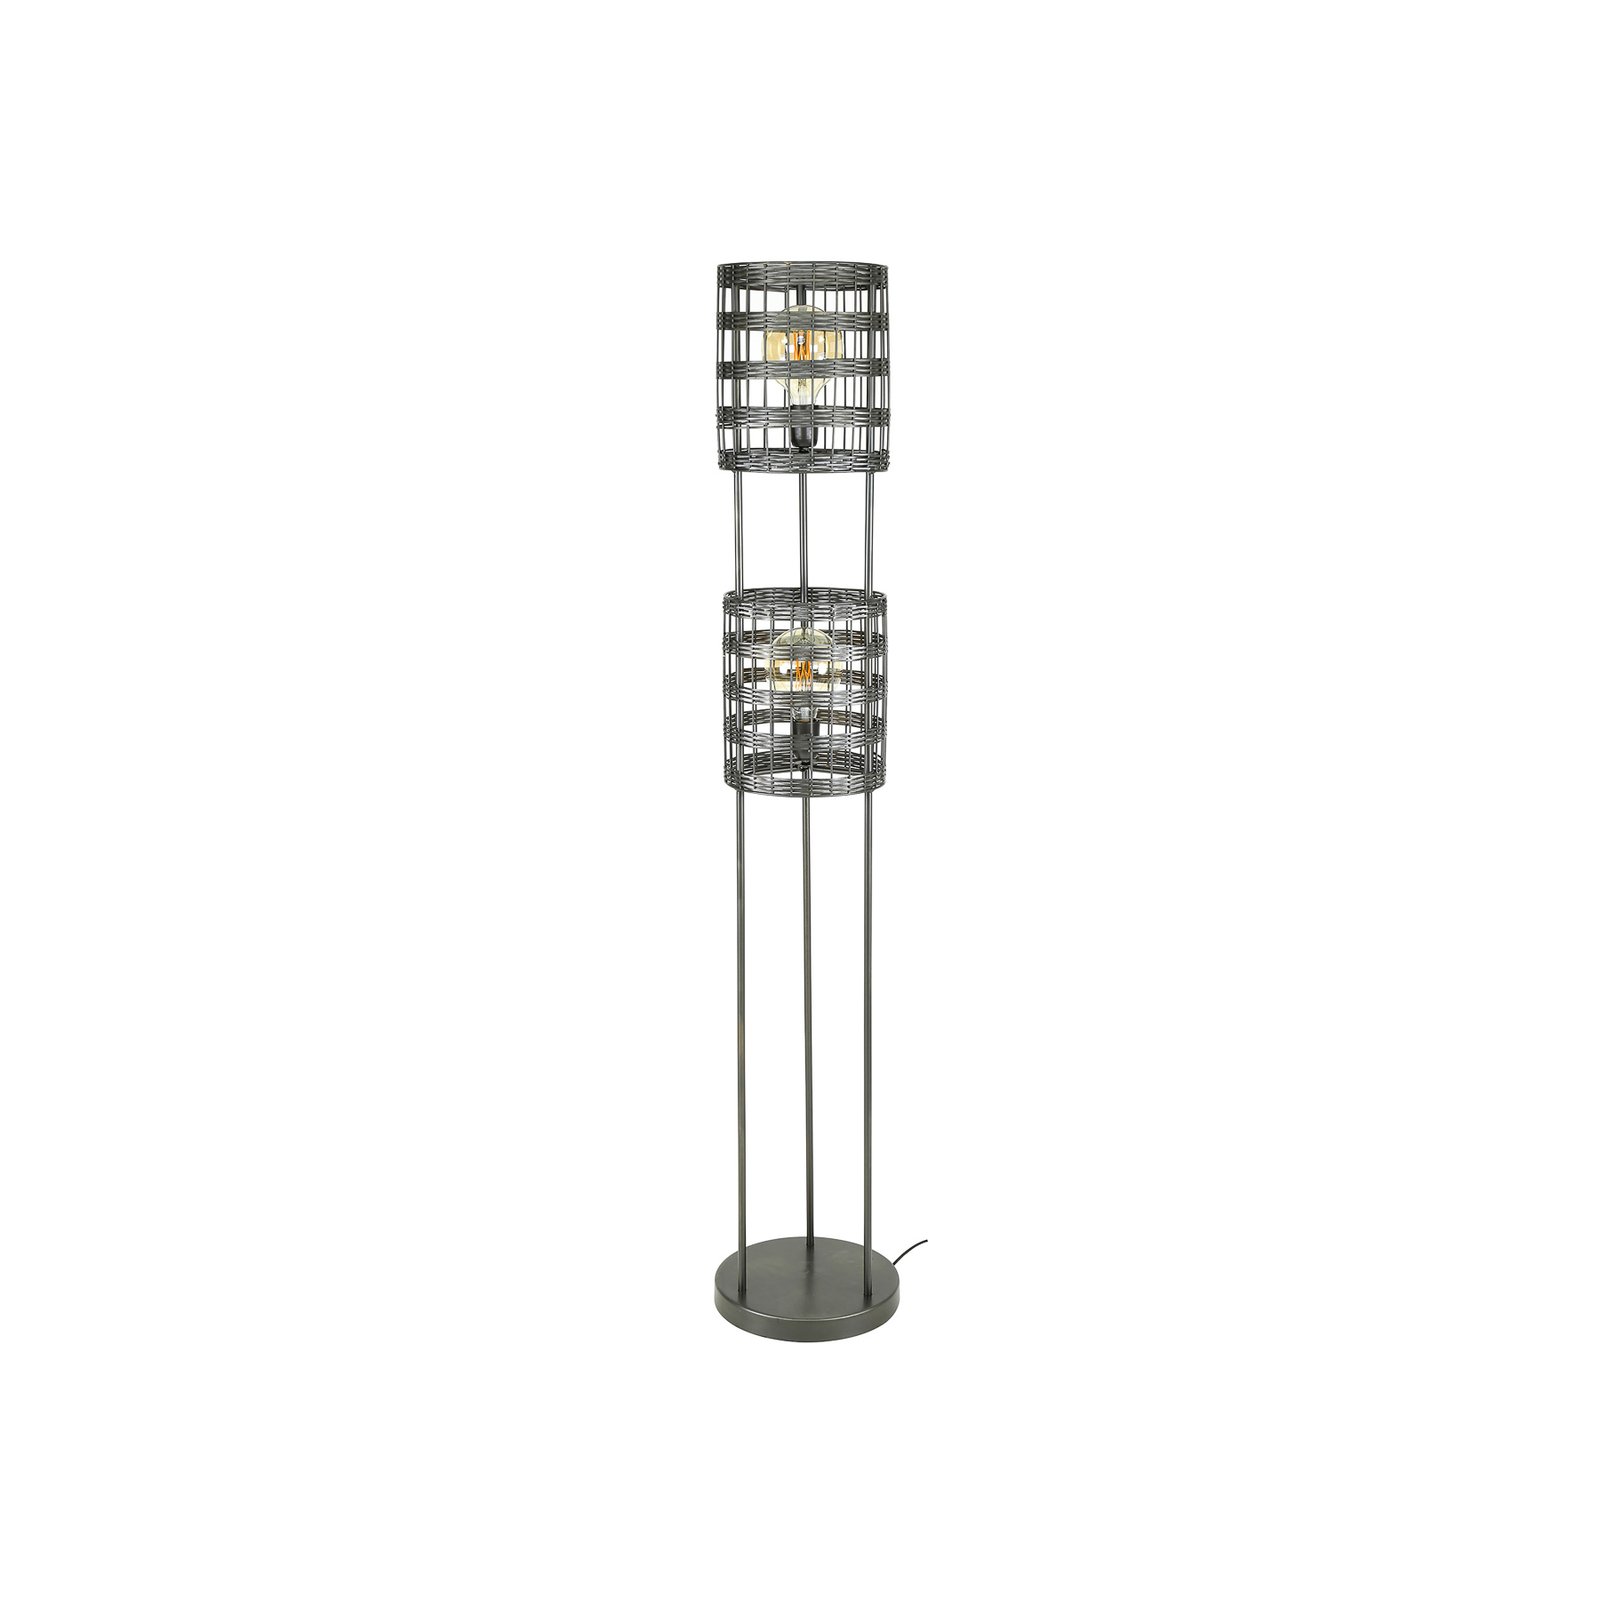 Graf-Fiesko gulvlampe, sort-nikkel, 2 lyskilder